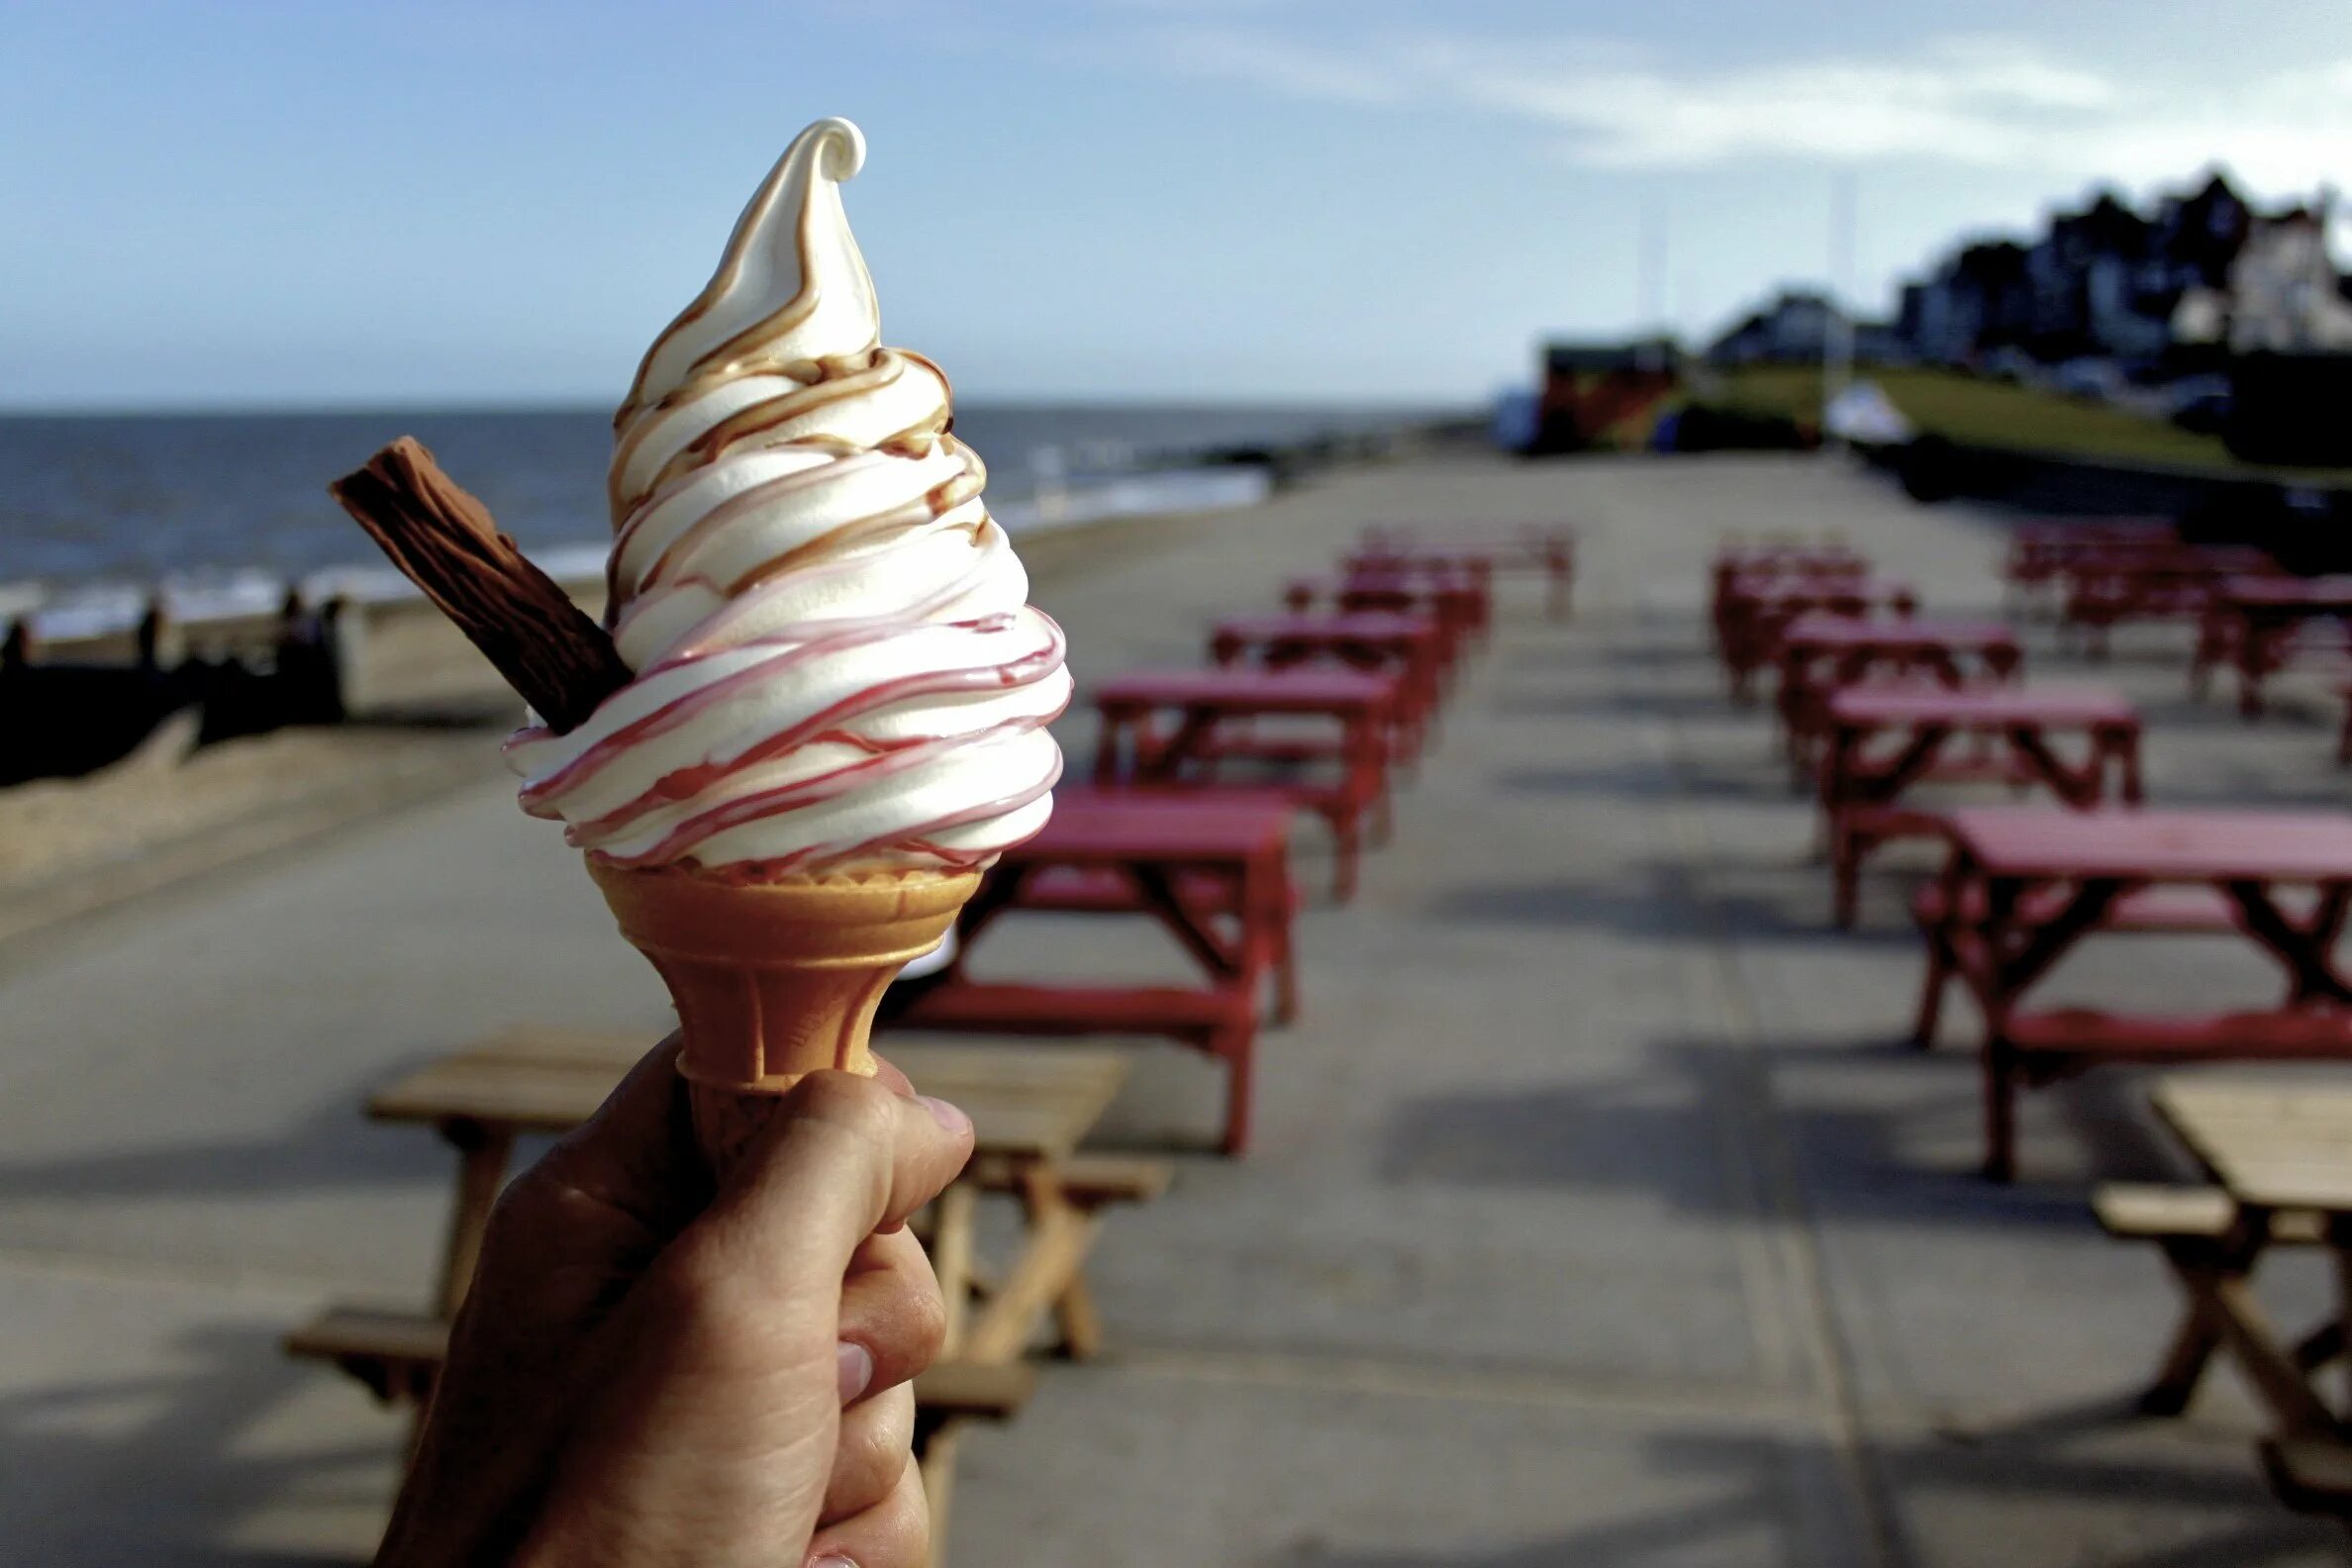 Айс Крим мороженщик. Красивое мороженое. Мягкое мороженое. Мороженое красиво.